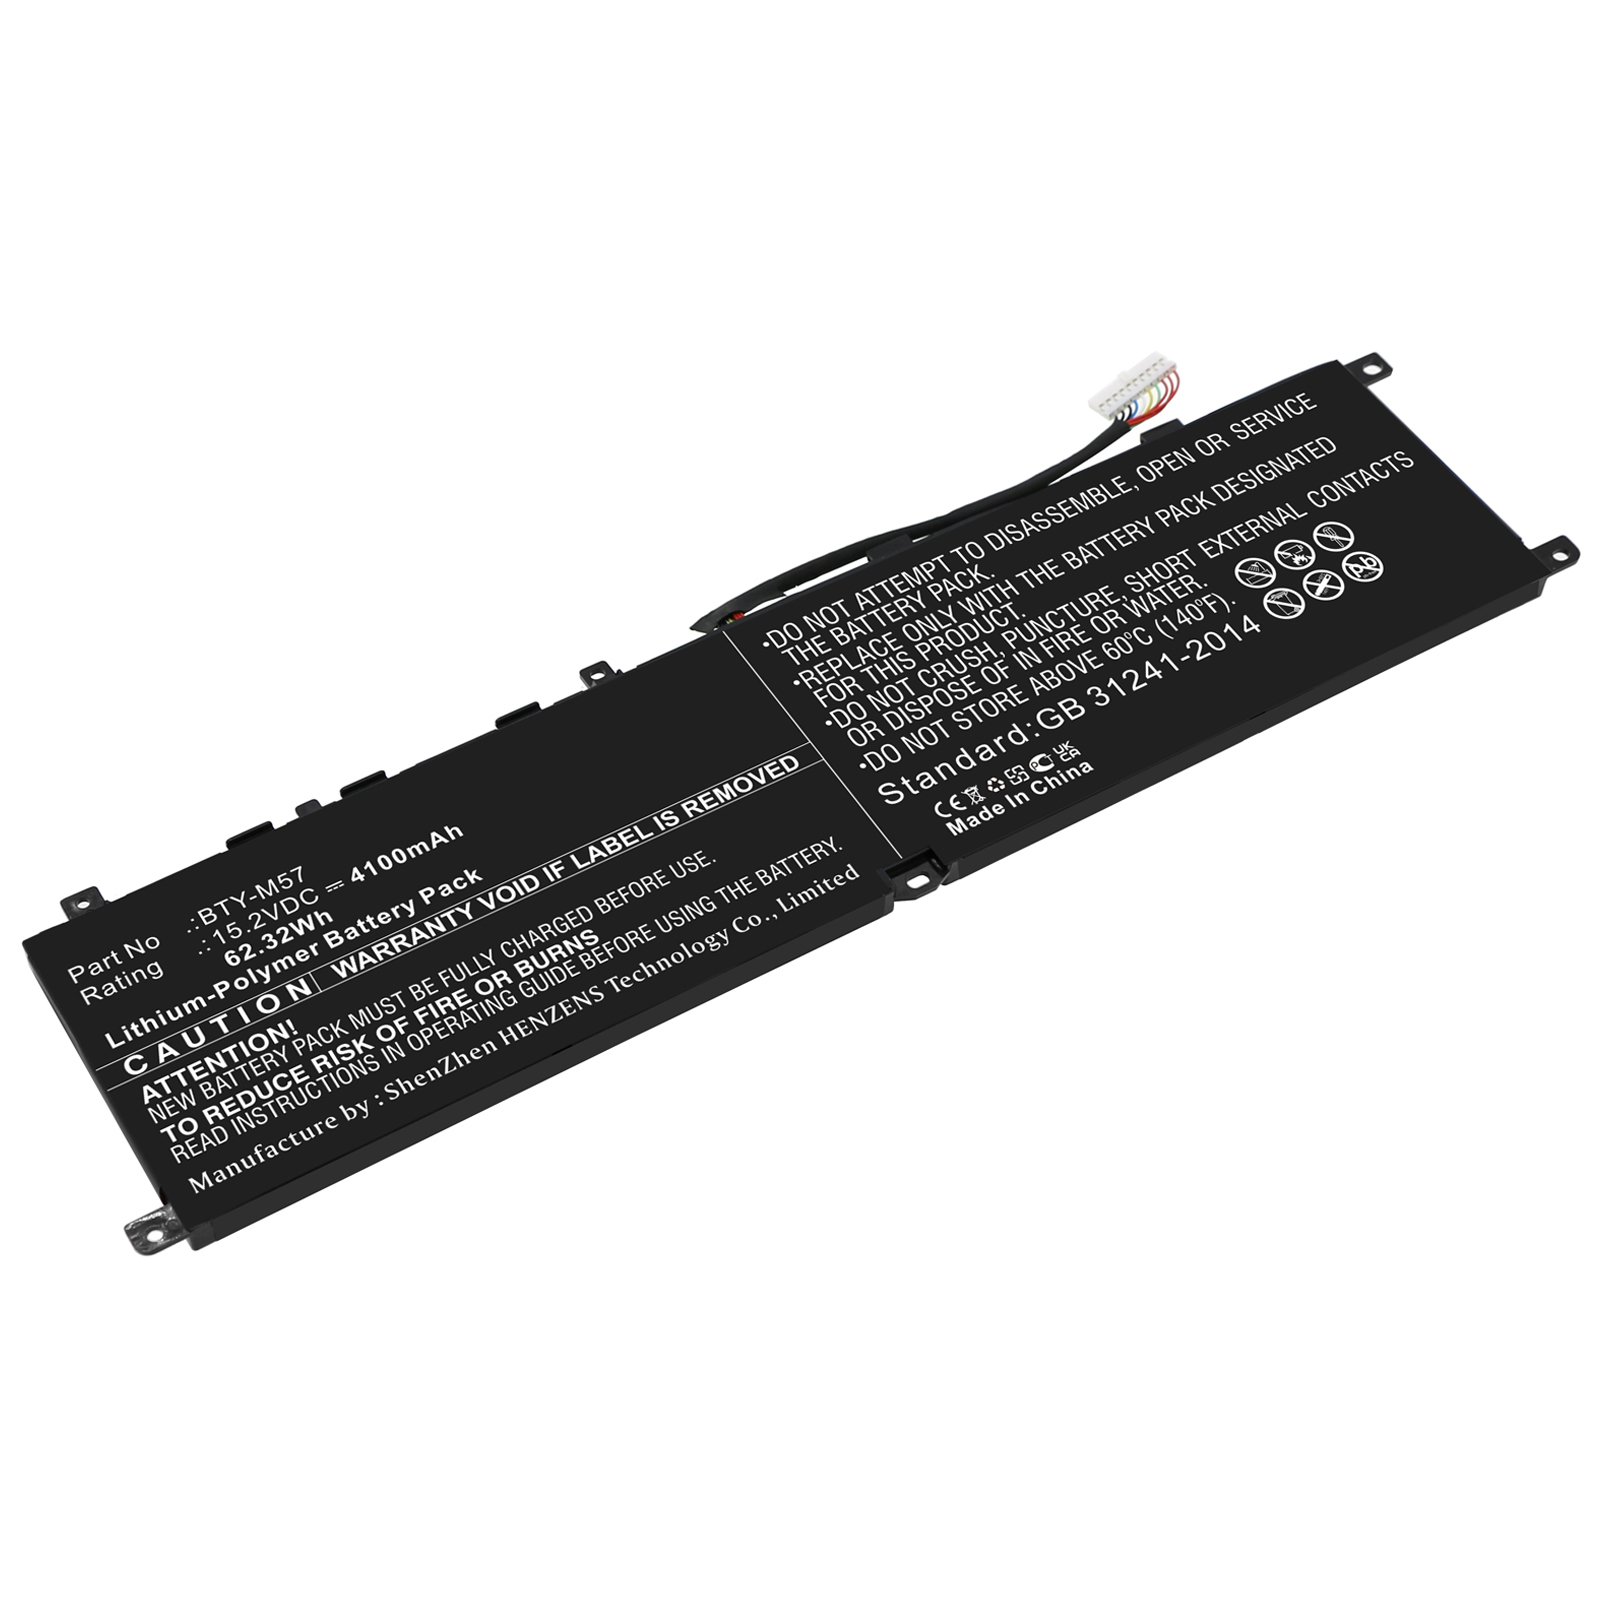 Synergy Digital Laptop Battery, Compatible with MSI BTY-M57 Laptop Battery (Li-Pol, 15.2V, 4100mAh)